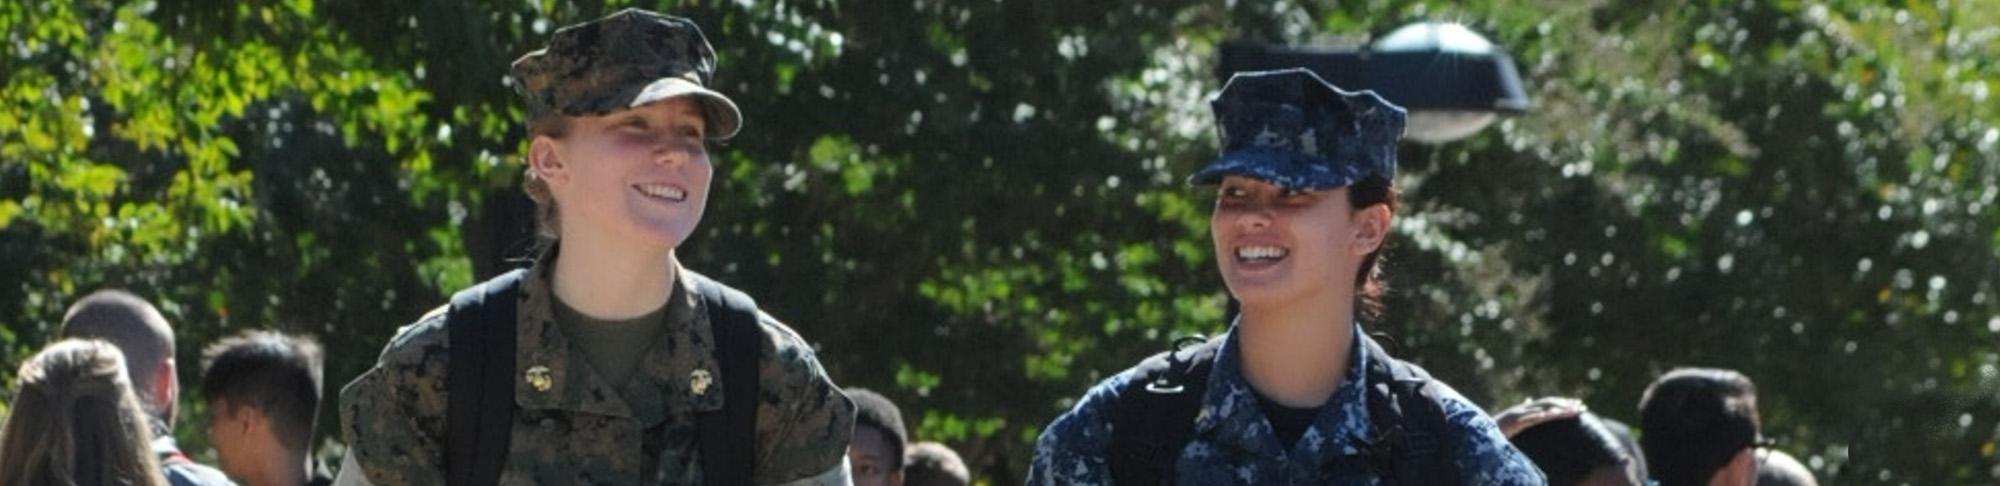 Midshipmen, both female in uniform, walking to class